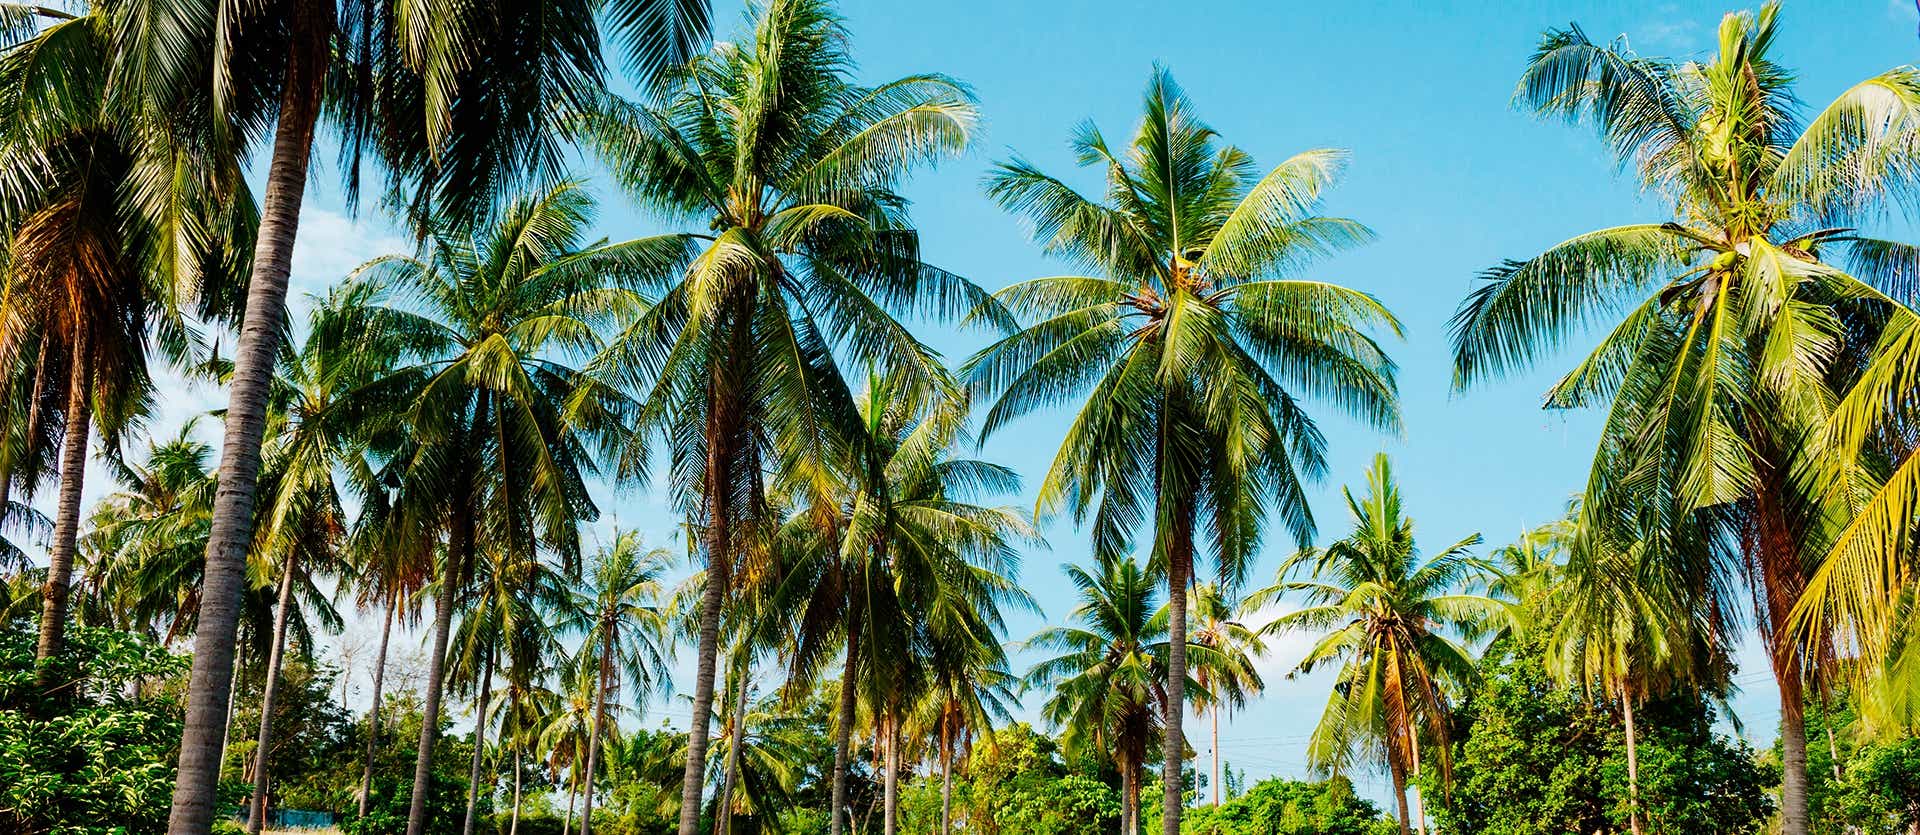 Tropical Palm Trees <span class="iconos separador"></span> Bangkok